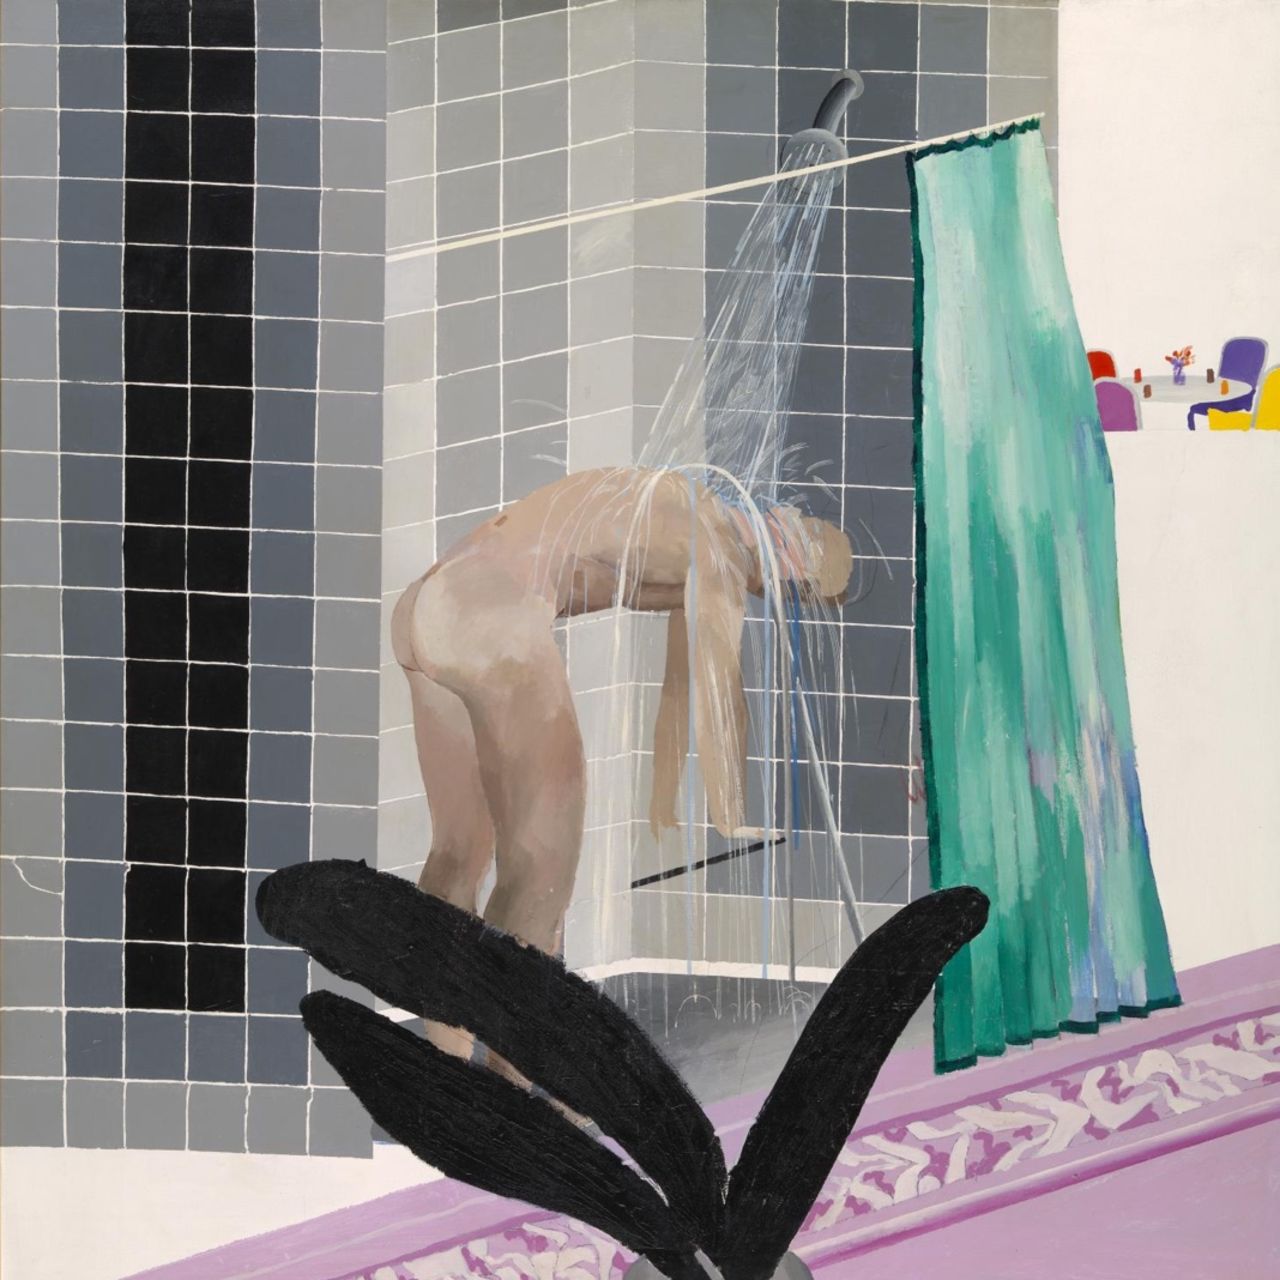 "Man in Shower in Beverly Hills" (1964) by David Hockney